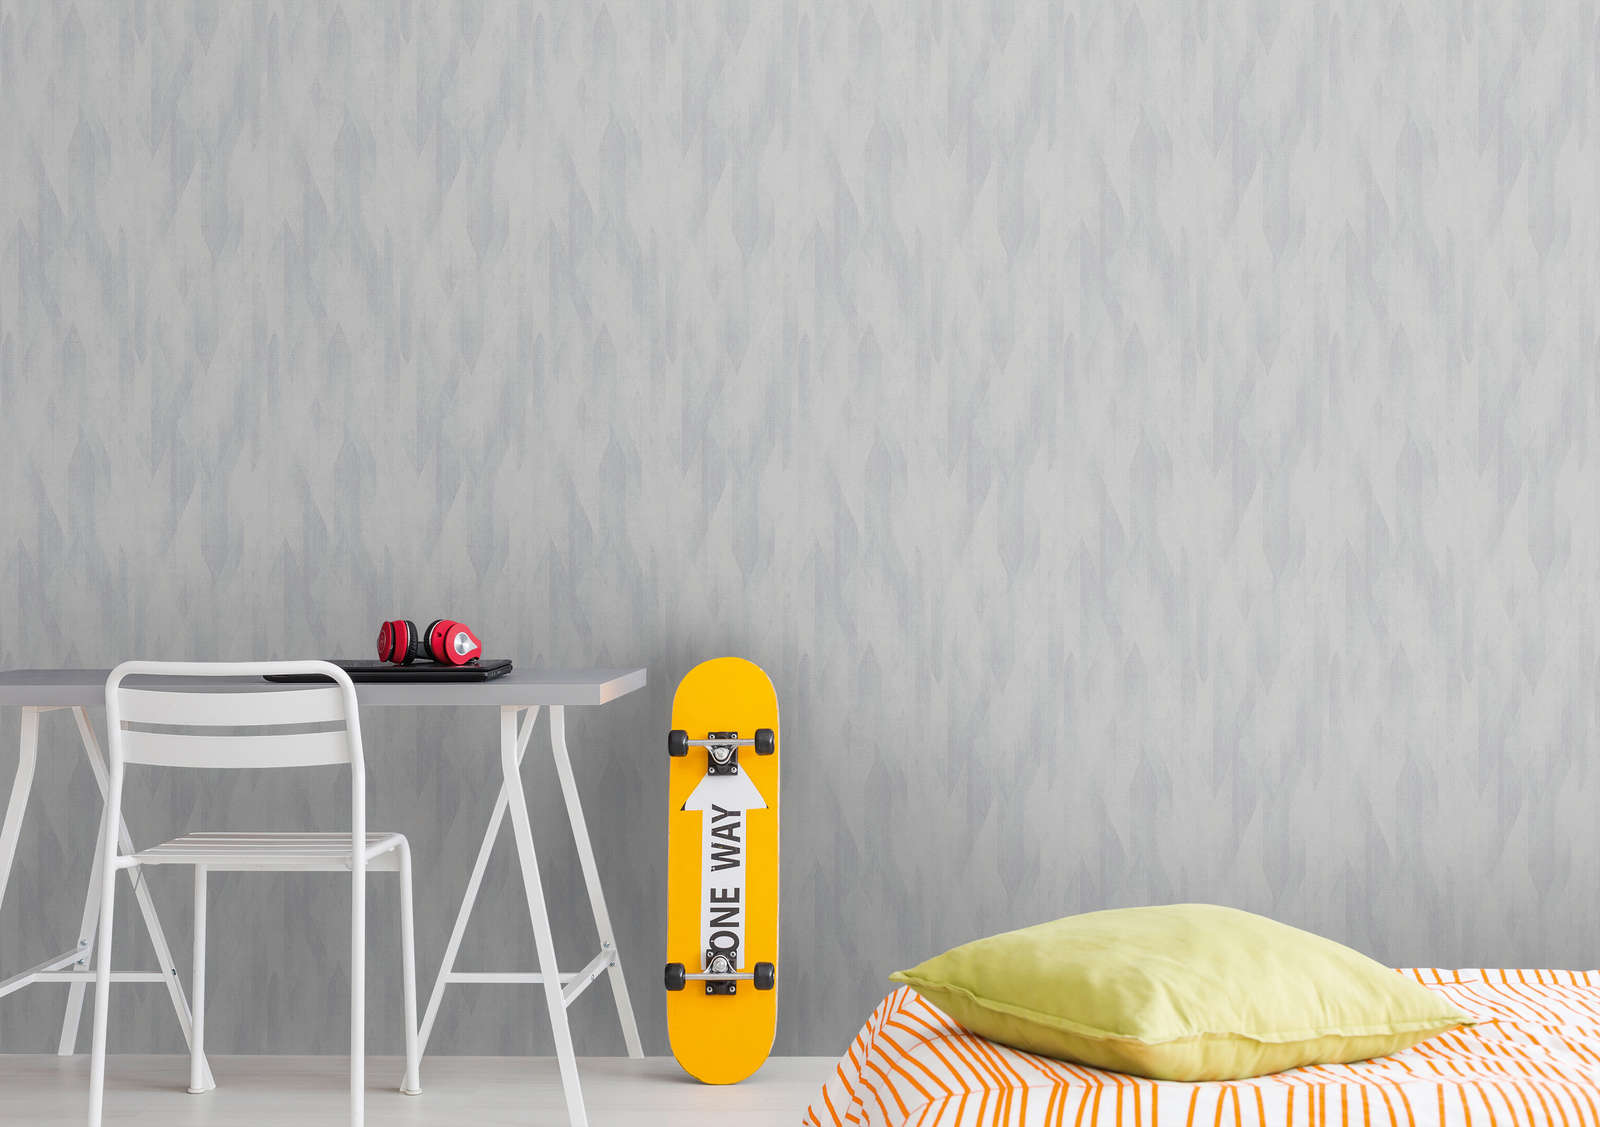             Graphic non-woven wallpaper with subtle diamond pattern - grey, white
        